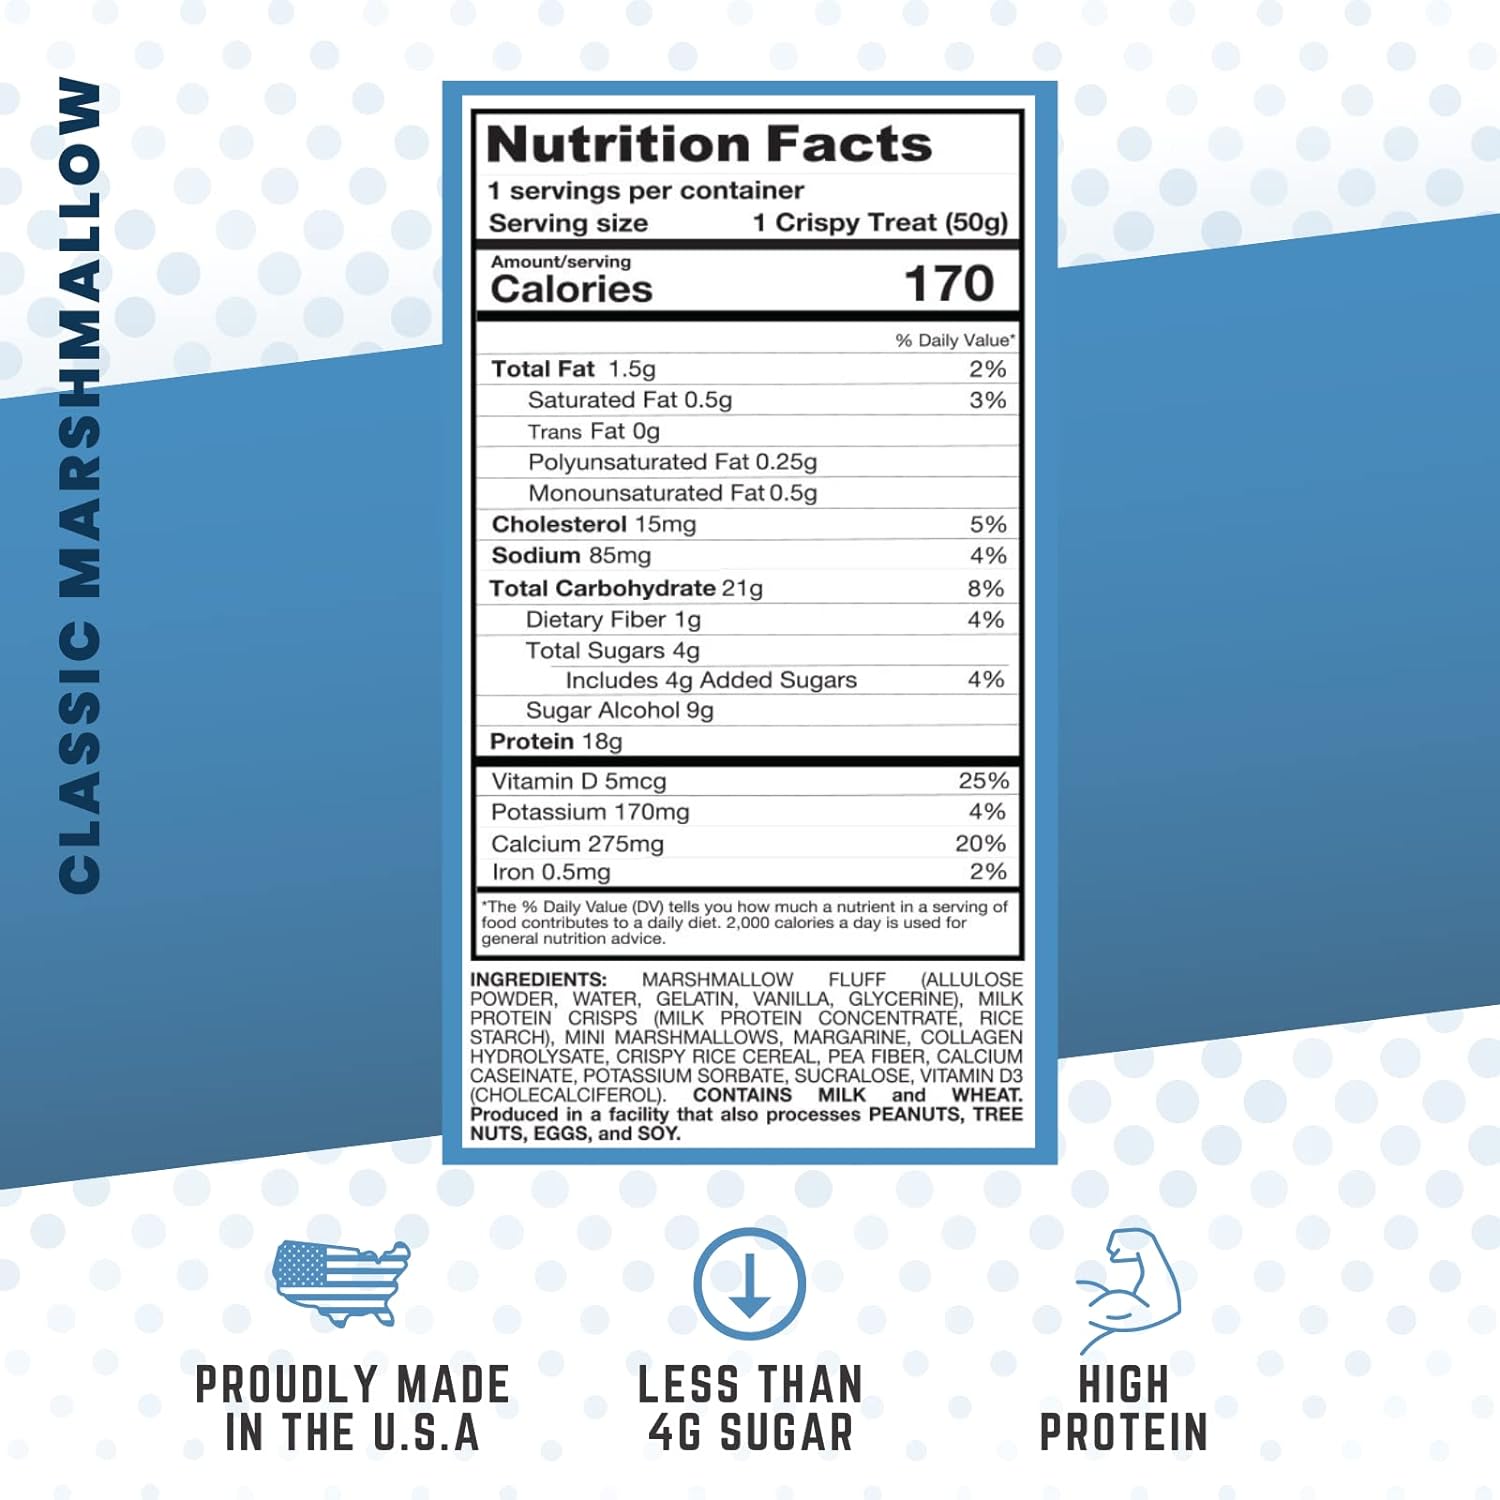 Purus Labs Protein Crispy Marshmallow Rice Crispy Square (1 friandise) 